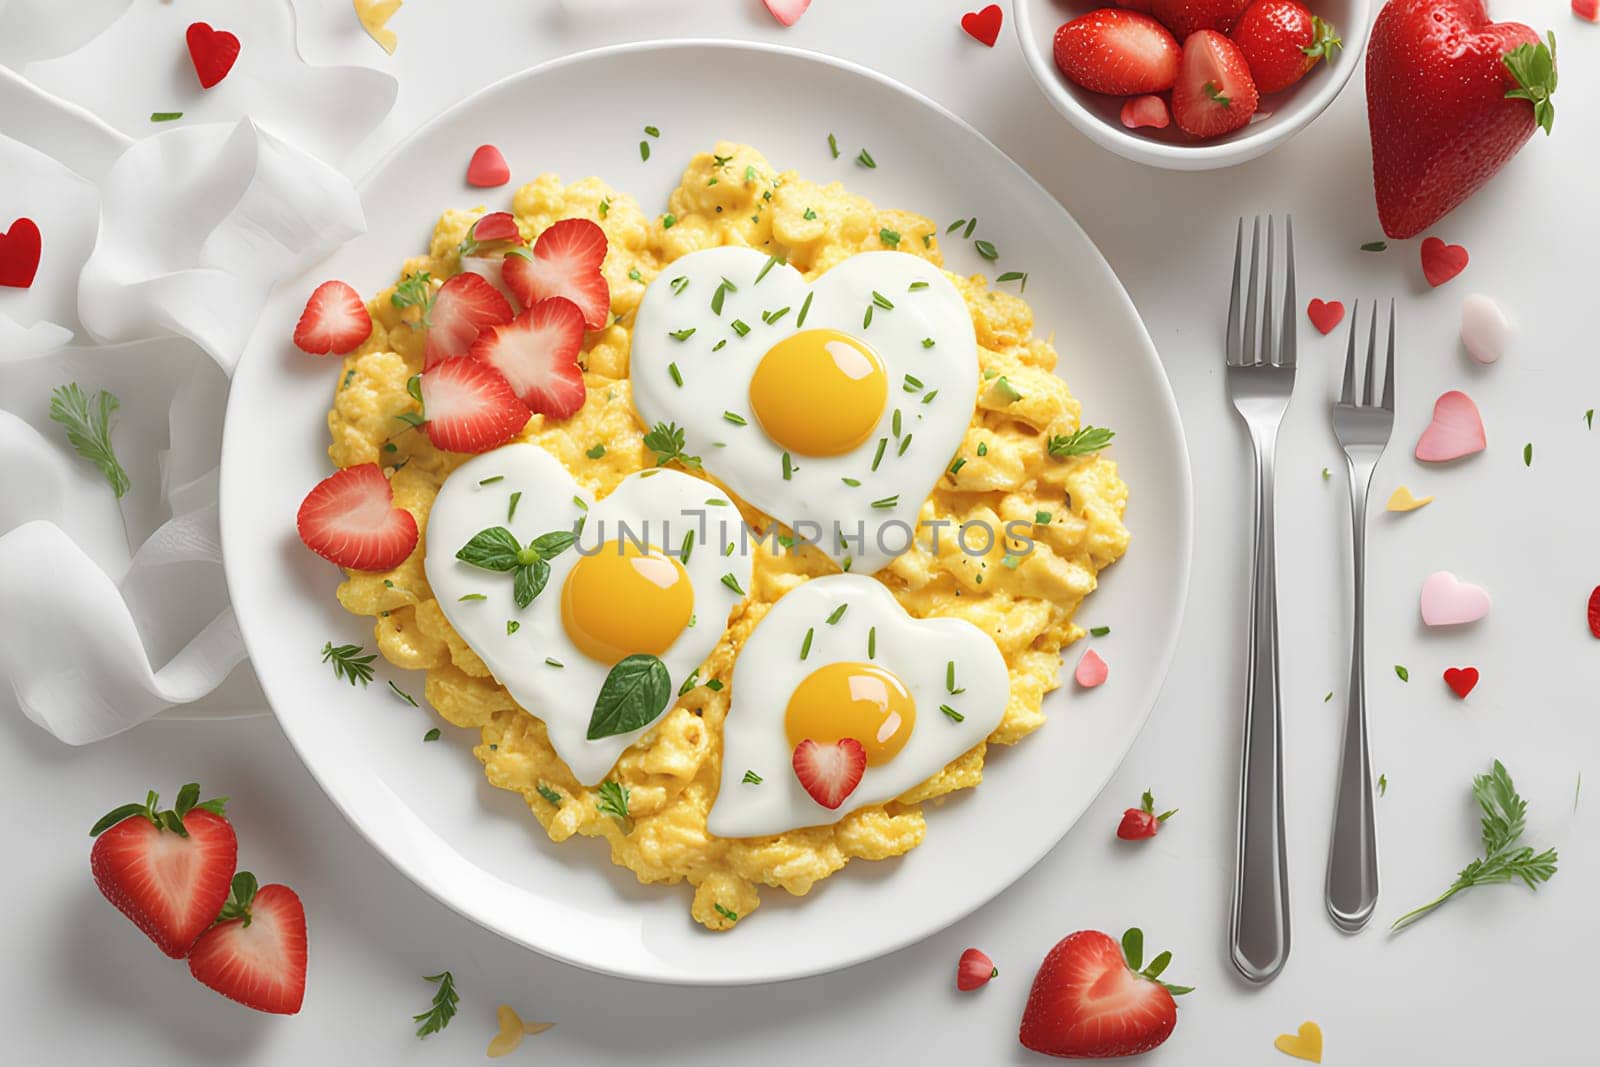 Valentine's Day breakfast - heart-shaped scrambled eggs